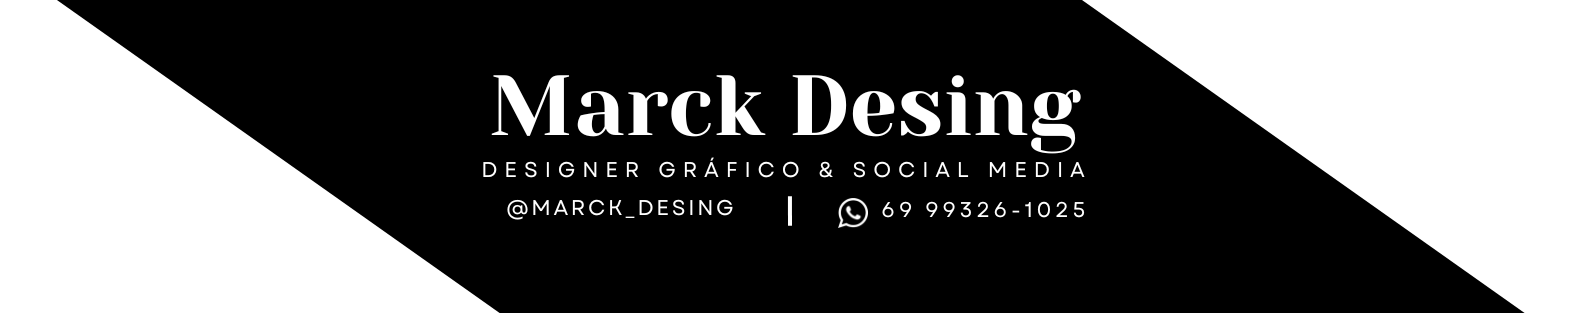 Banner de perfil de Marck Desing